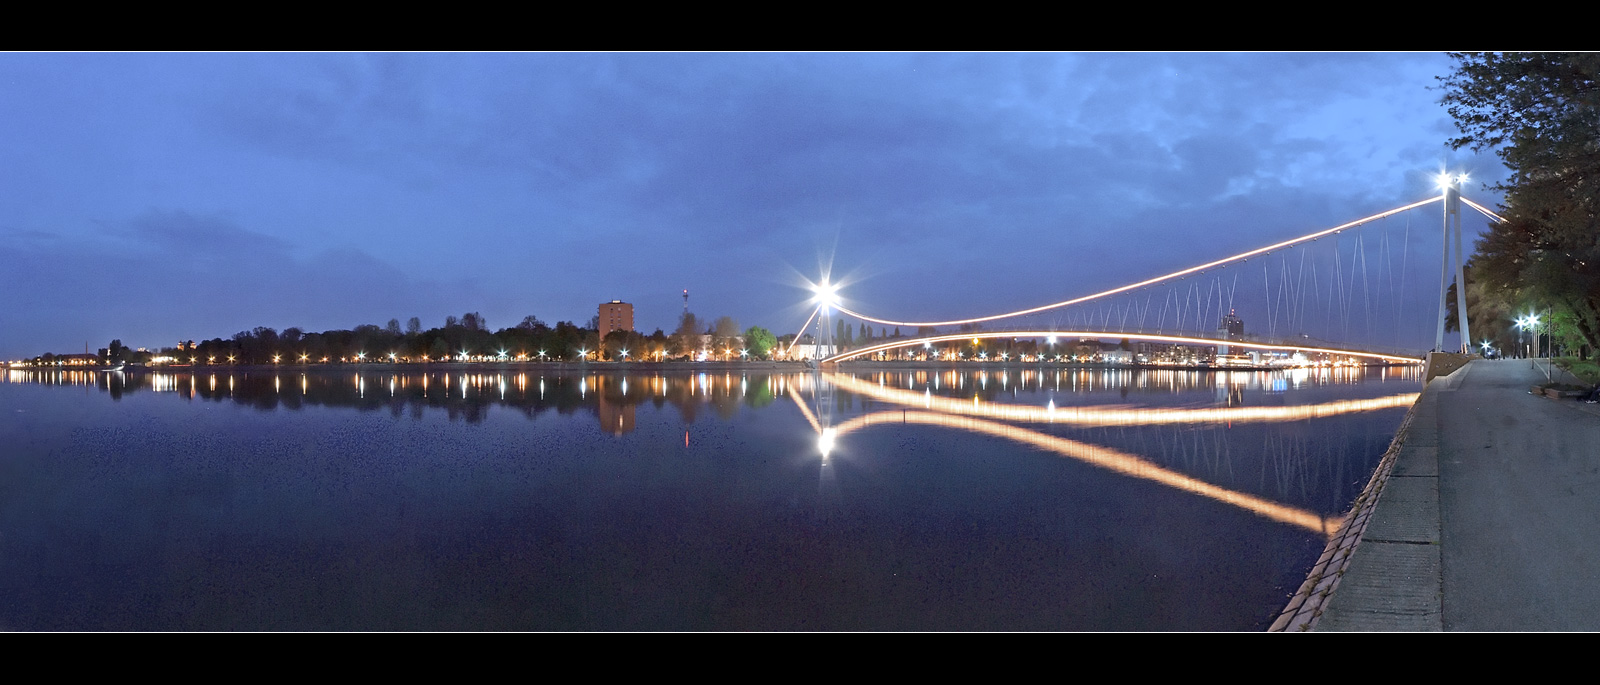 Osijek

Osijek

Foto: Toni

Kljune rijei: osijek most hotel crkva plavi sat